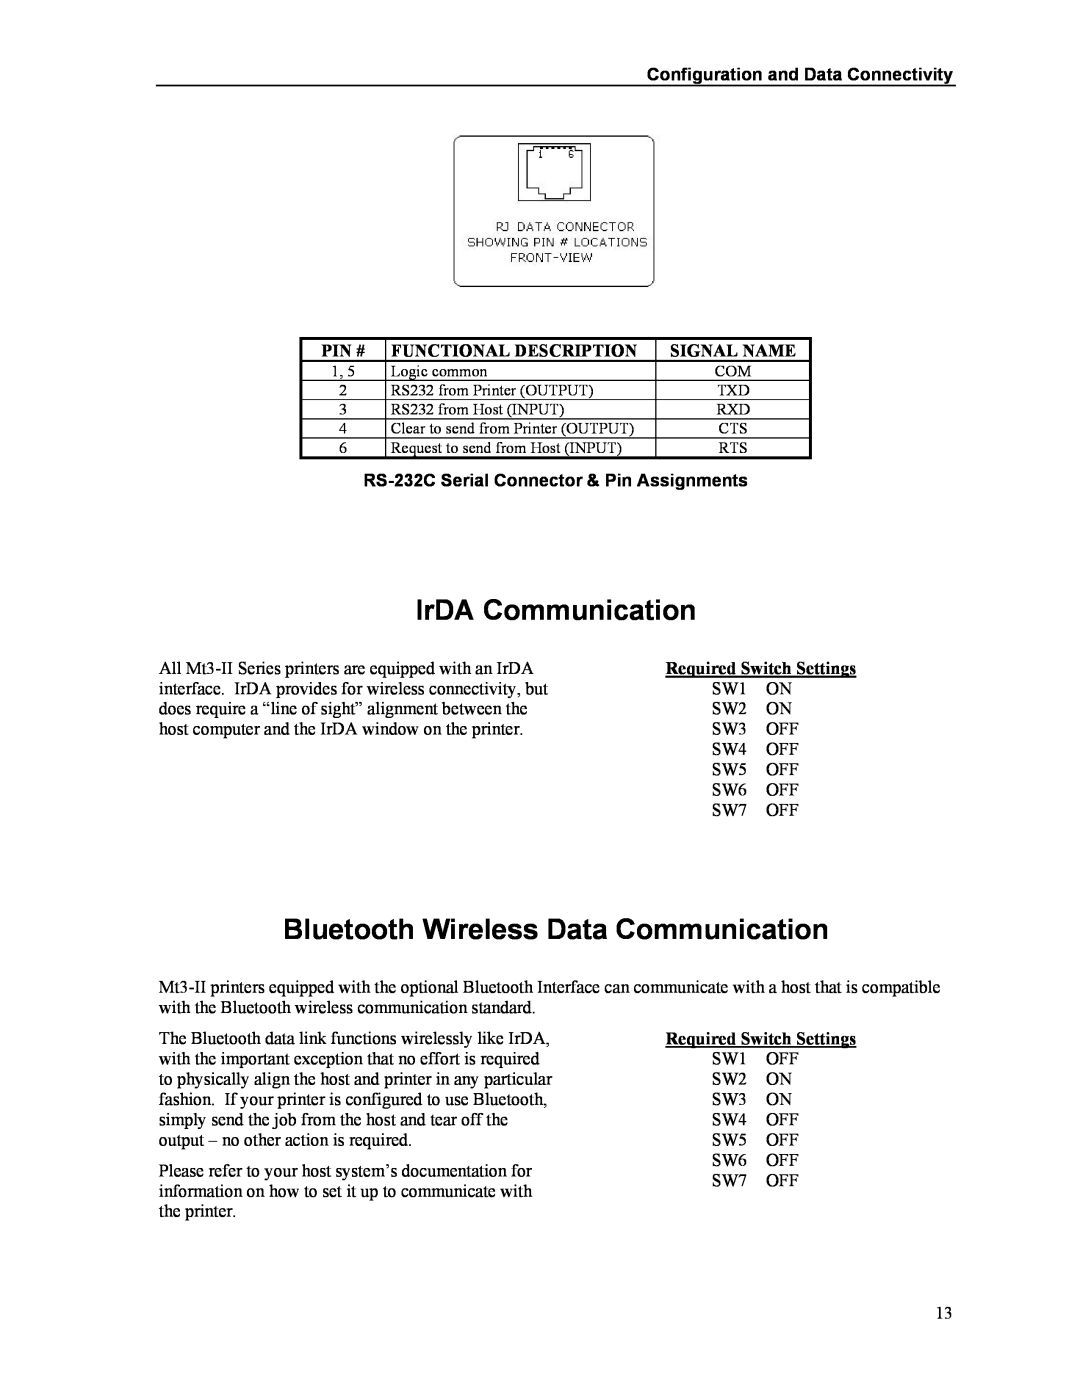 Printek Mt3-II manual IrDA Communication, Bluetooth Wireless Data Communication, Pin #, Functional Description, Signal Name 